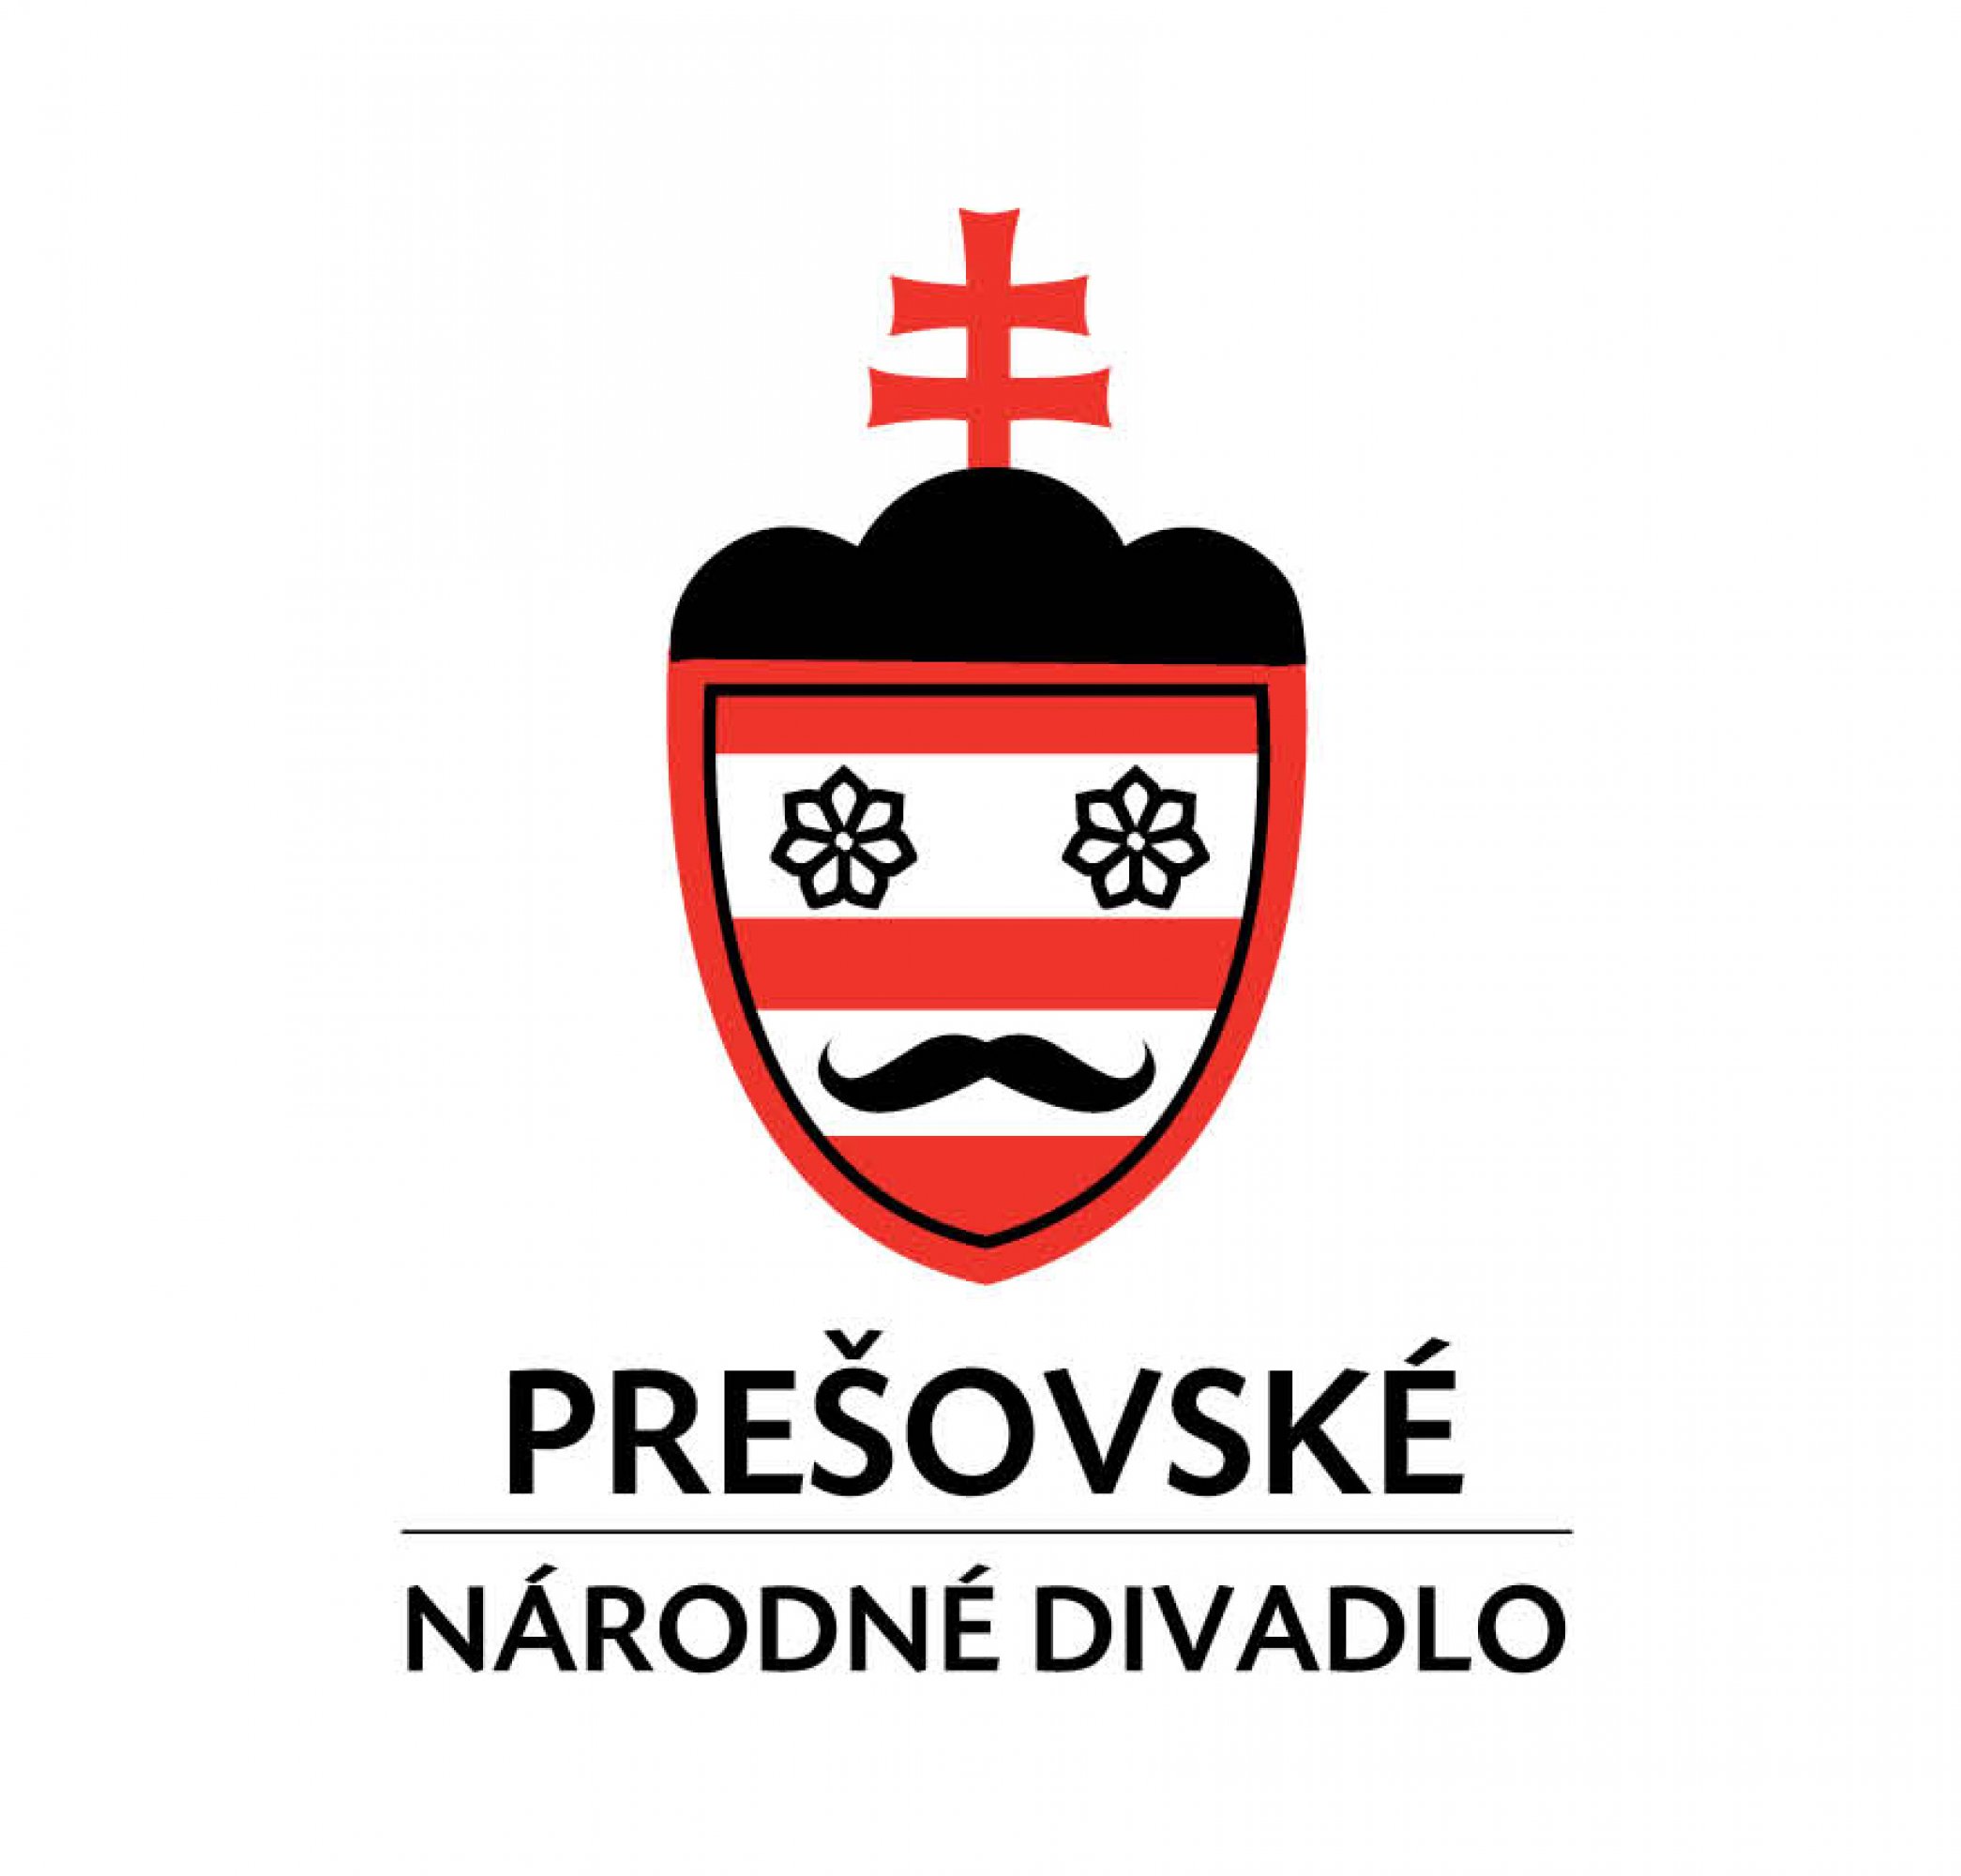 PND logo